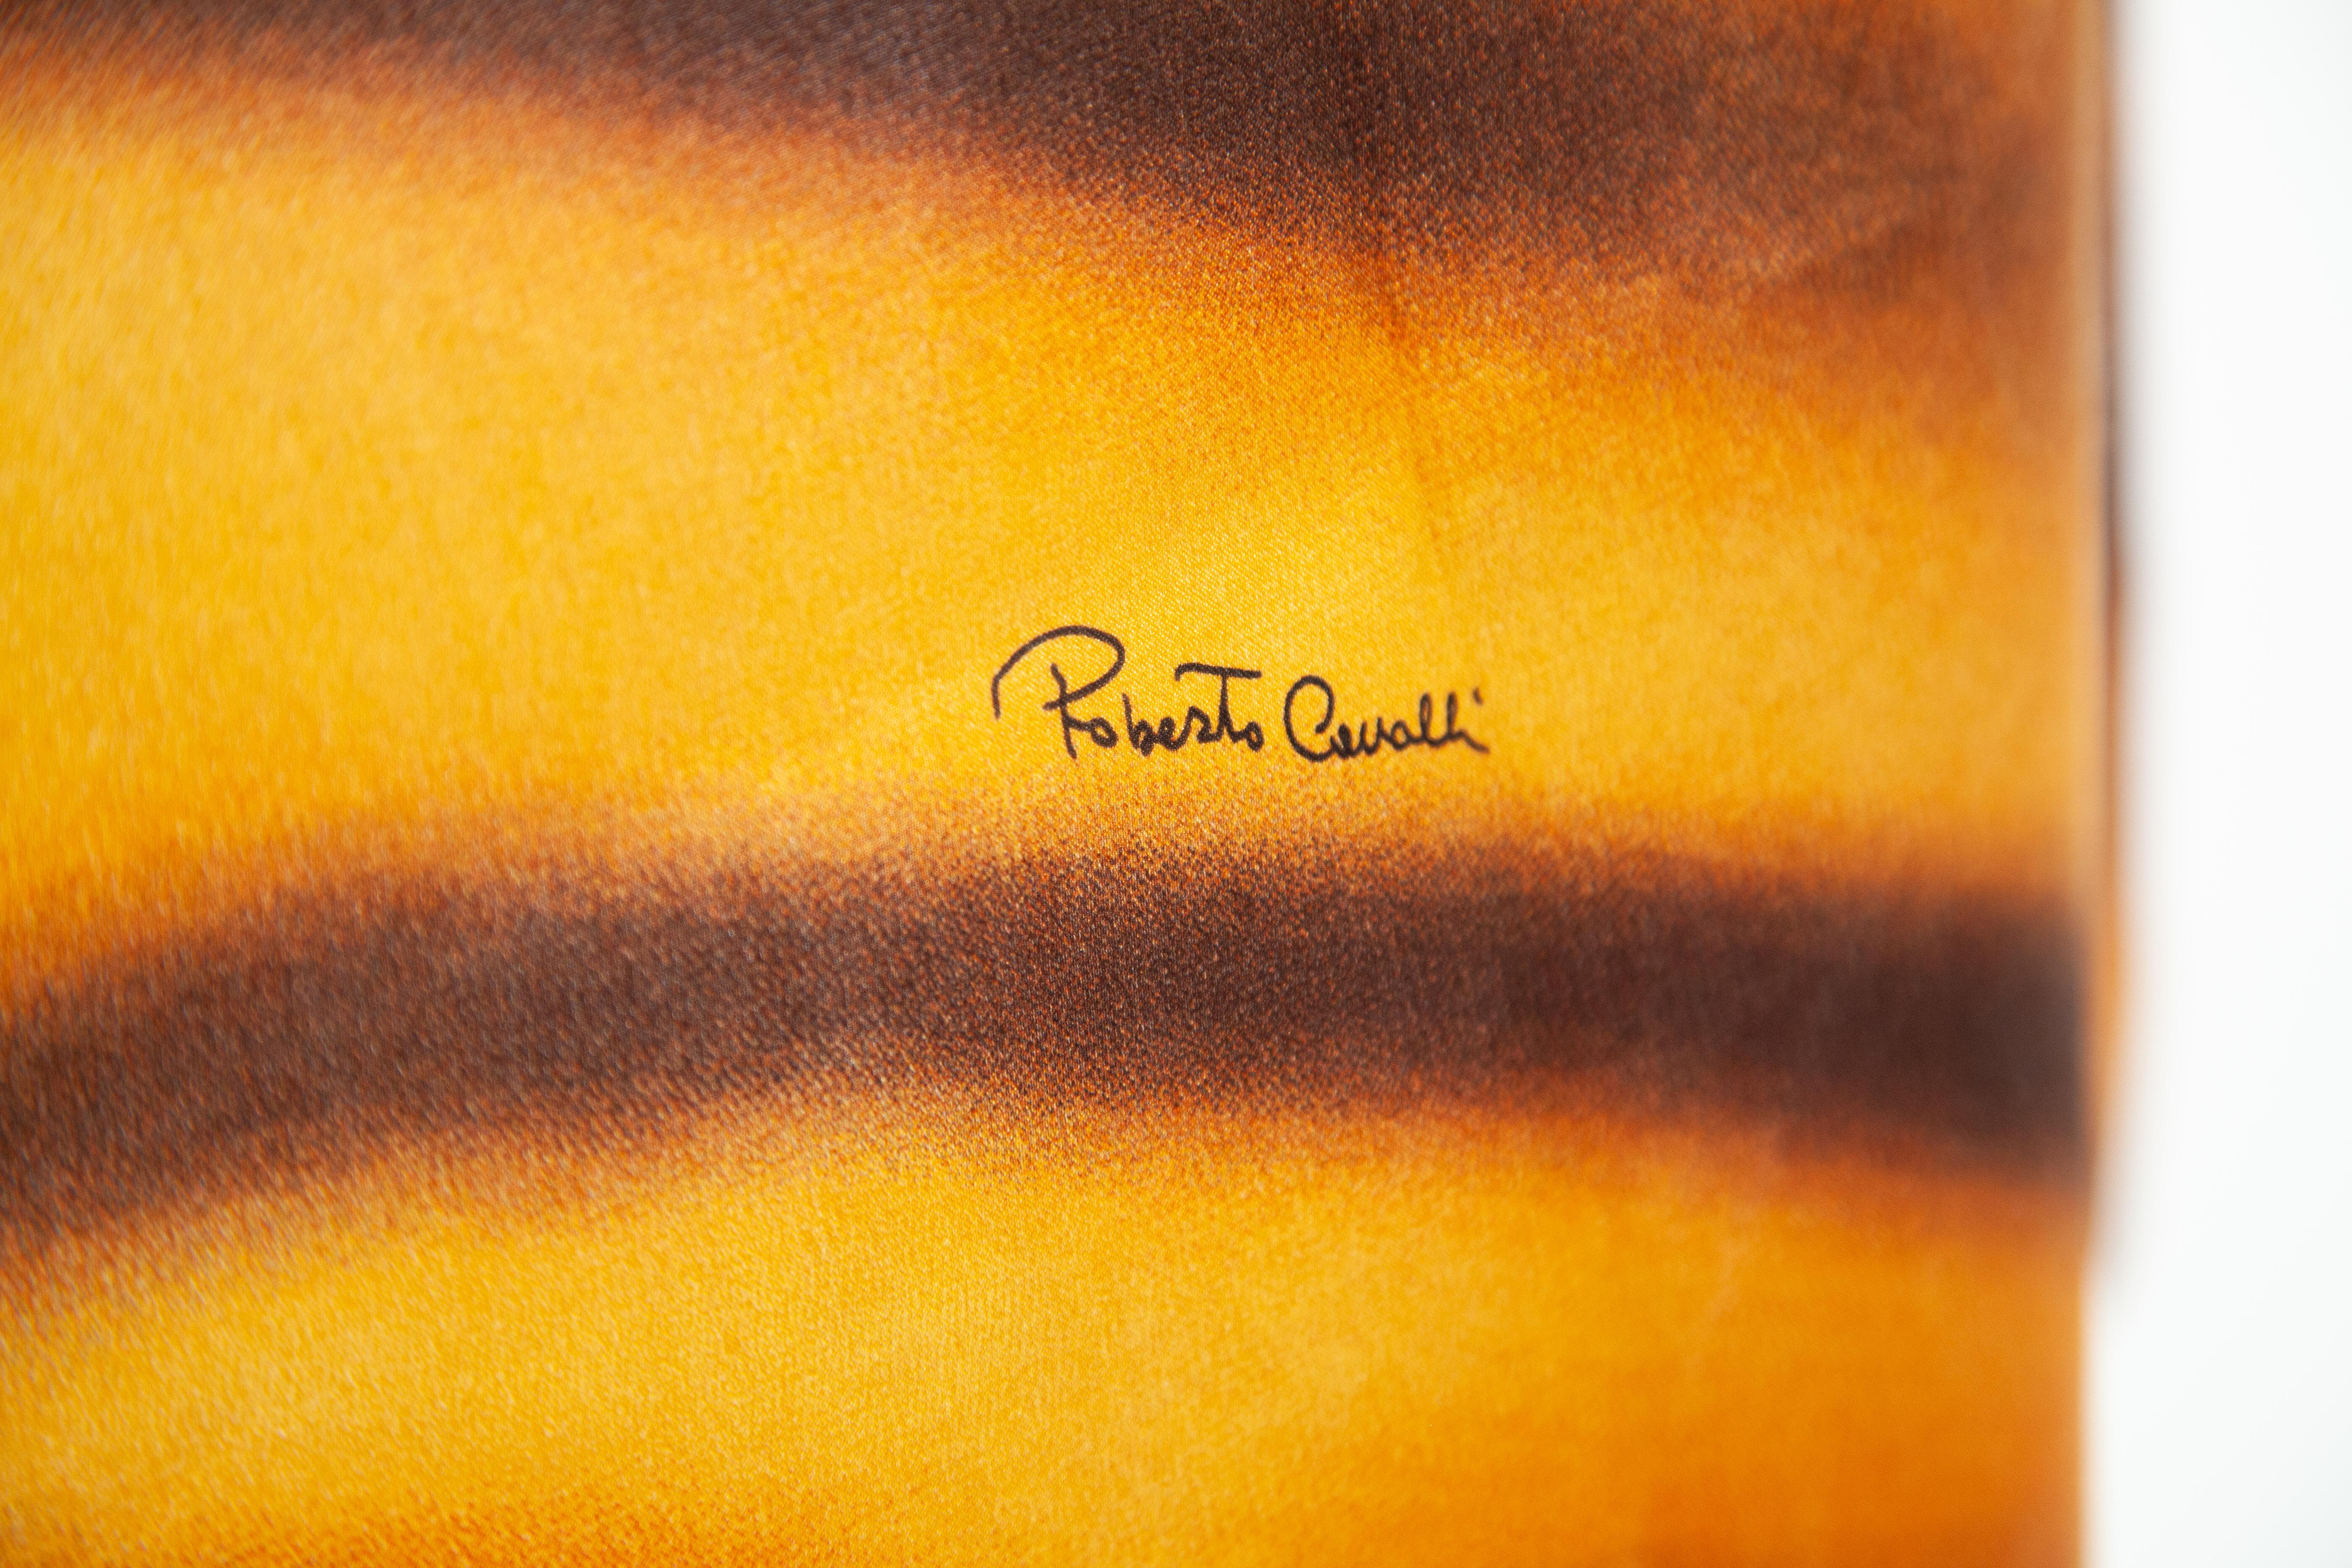 Roberto Cavalli signed tiger print silk oversized scarf
100% Silk
SS22 Collection

53